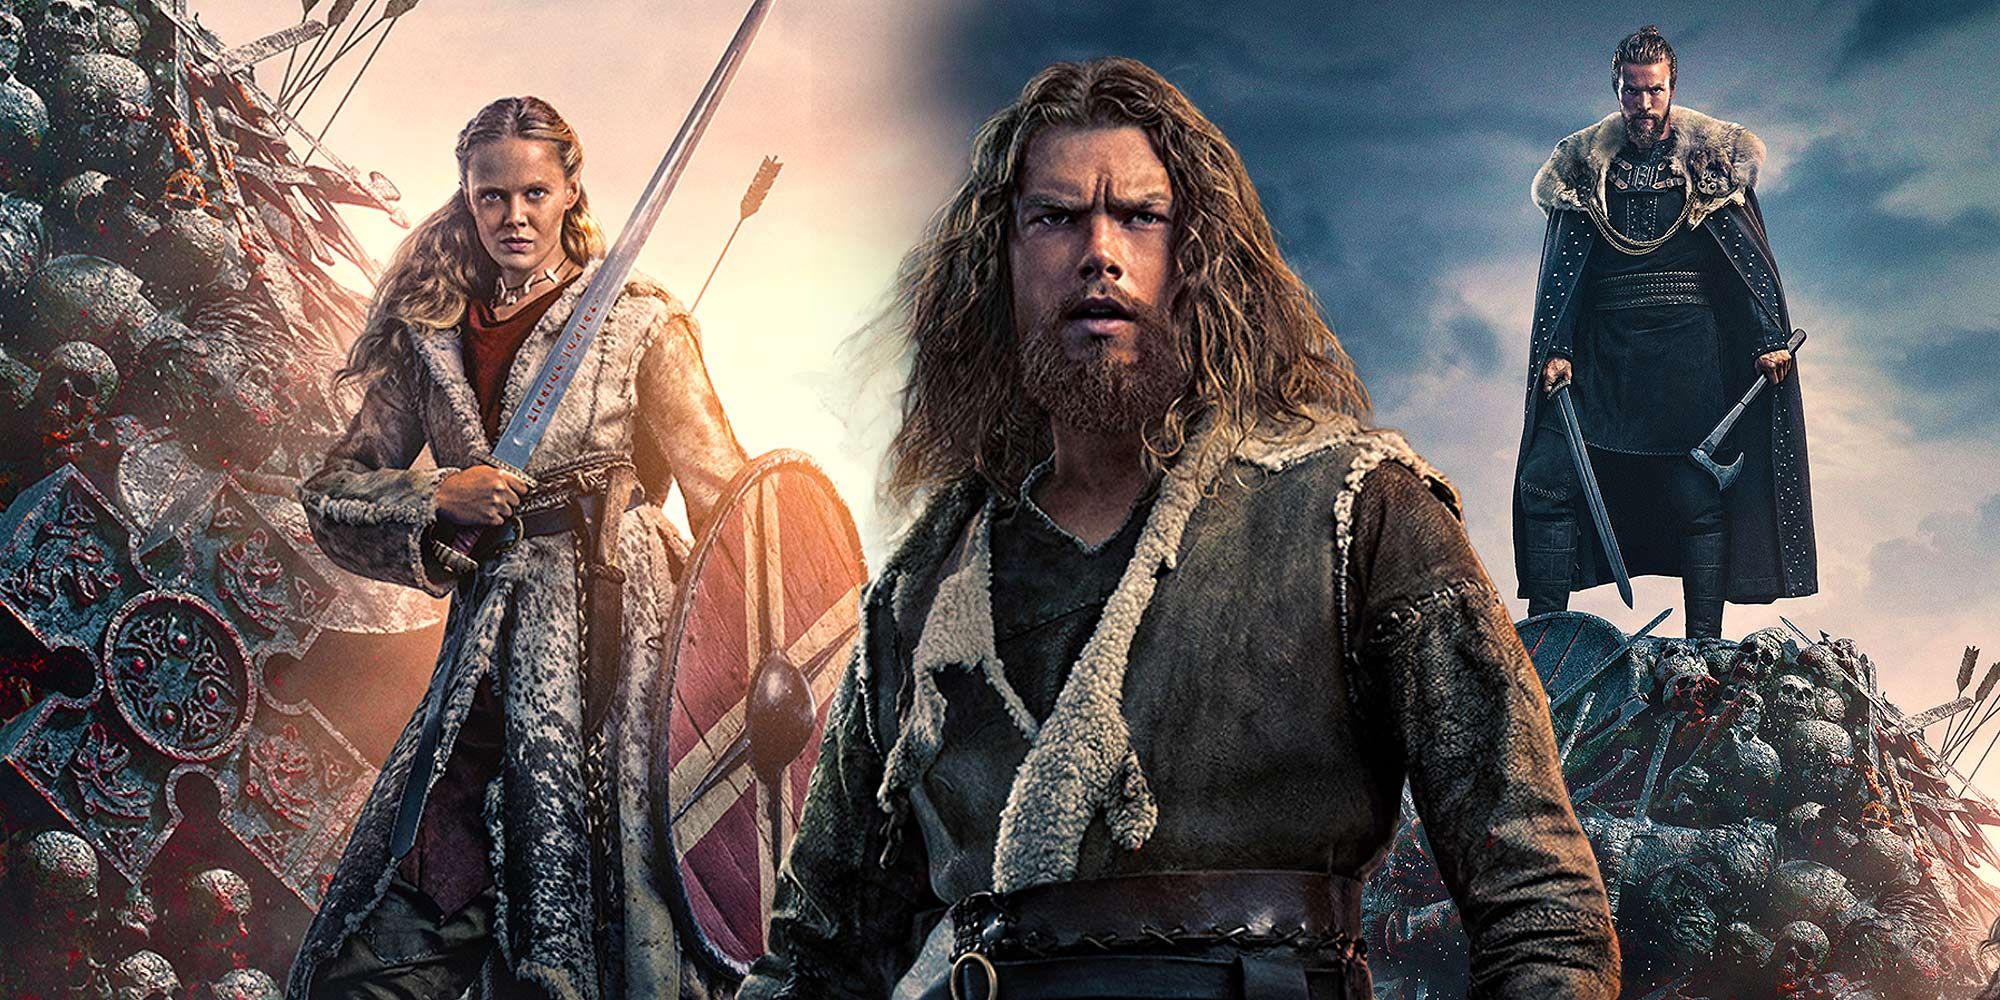 Vikings: Valhalla Trailer Reveals Epic Historical Battle Sequences